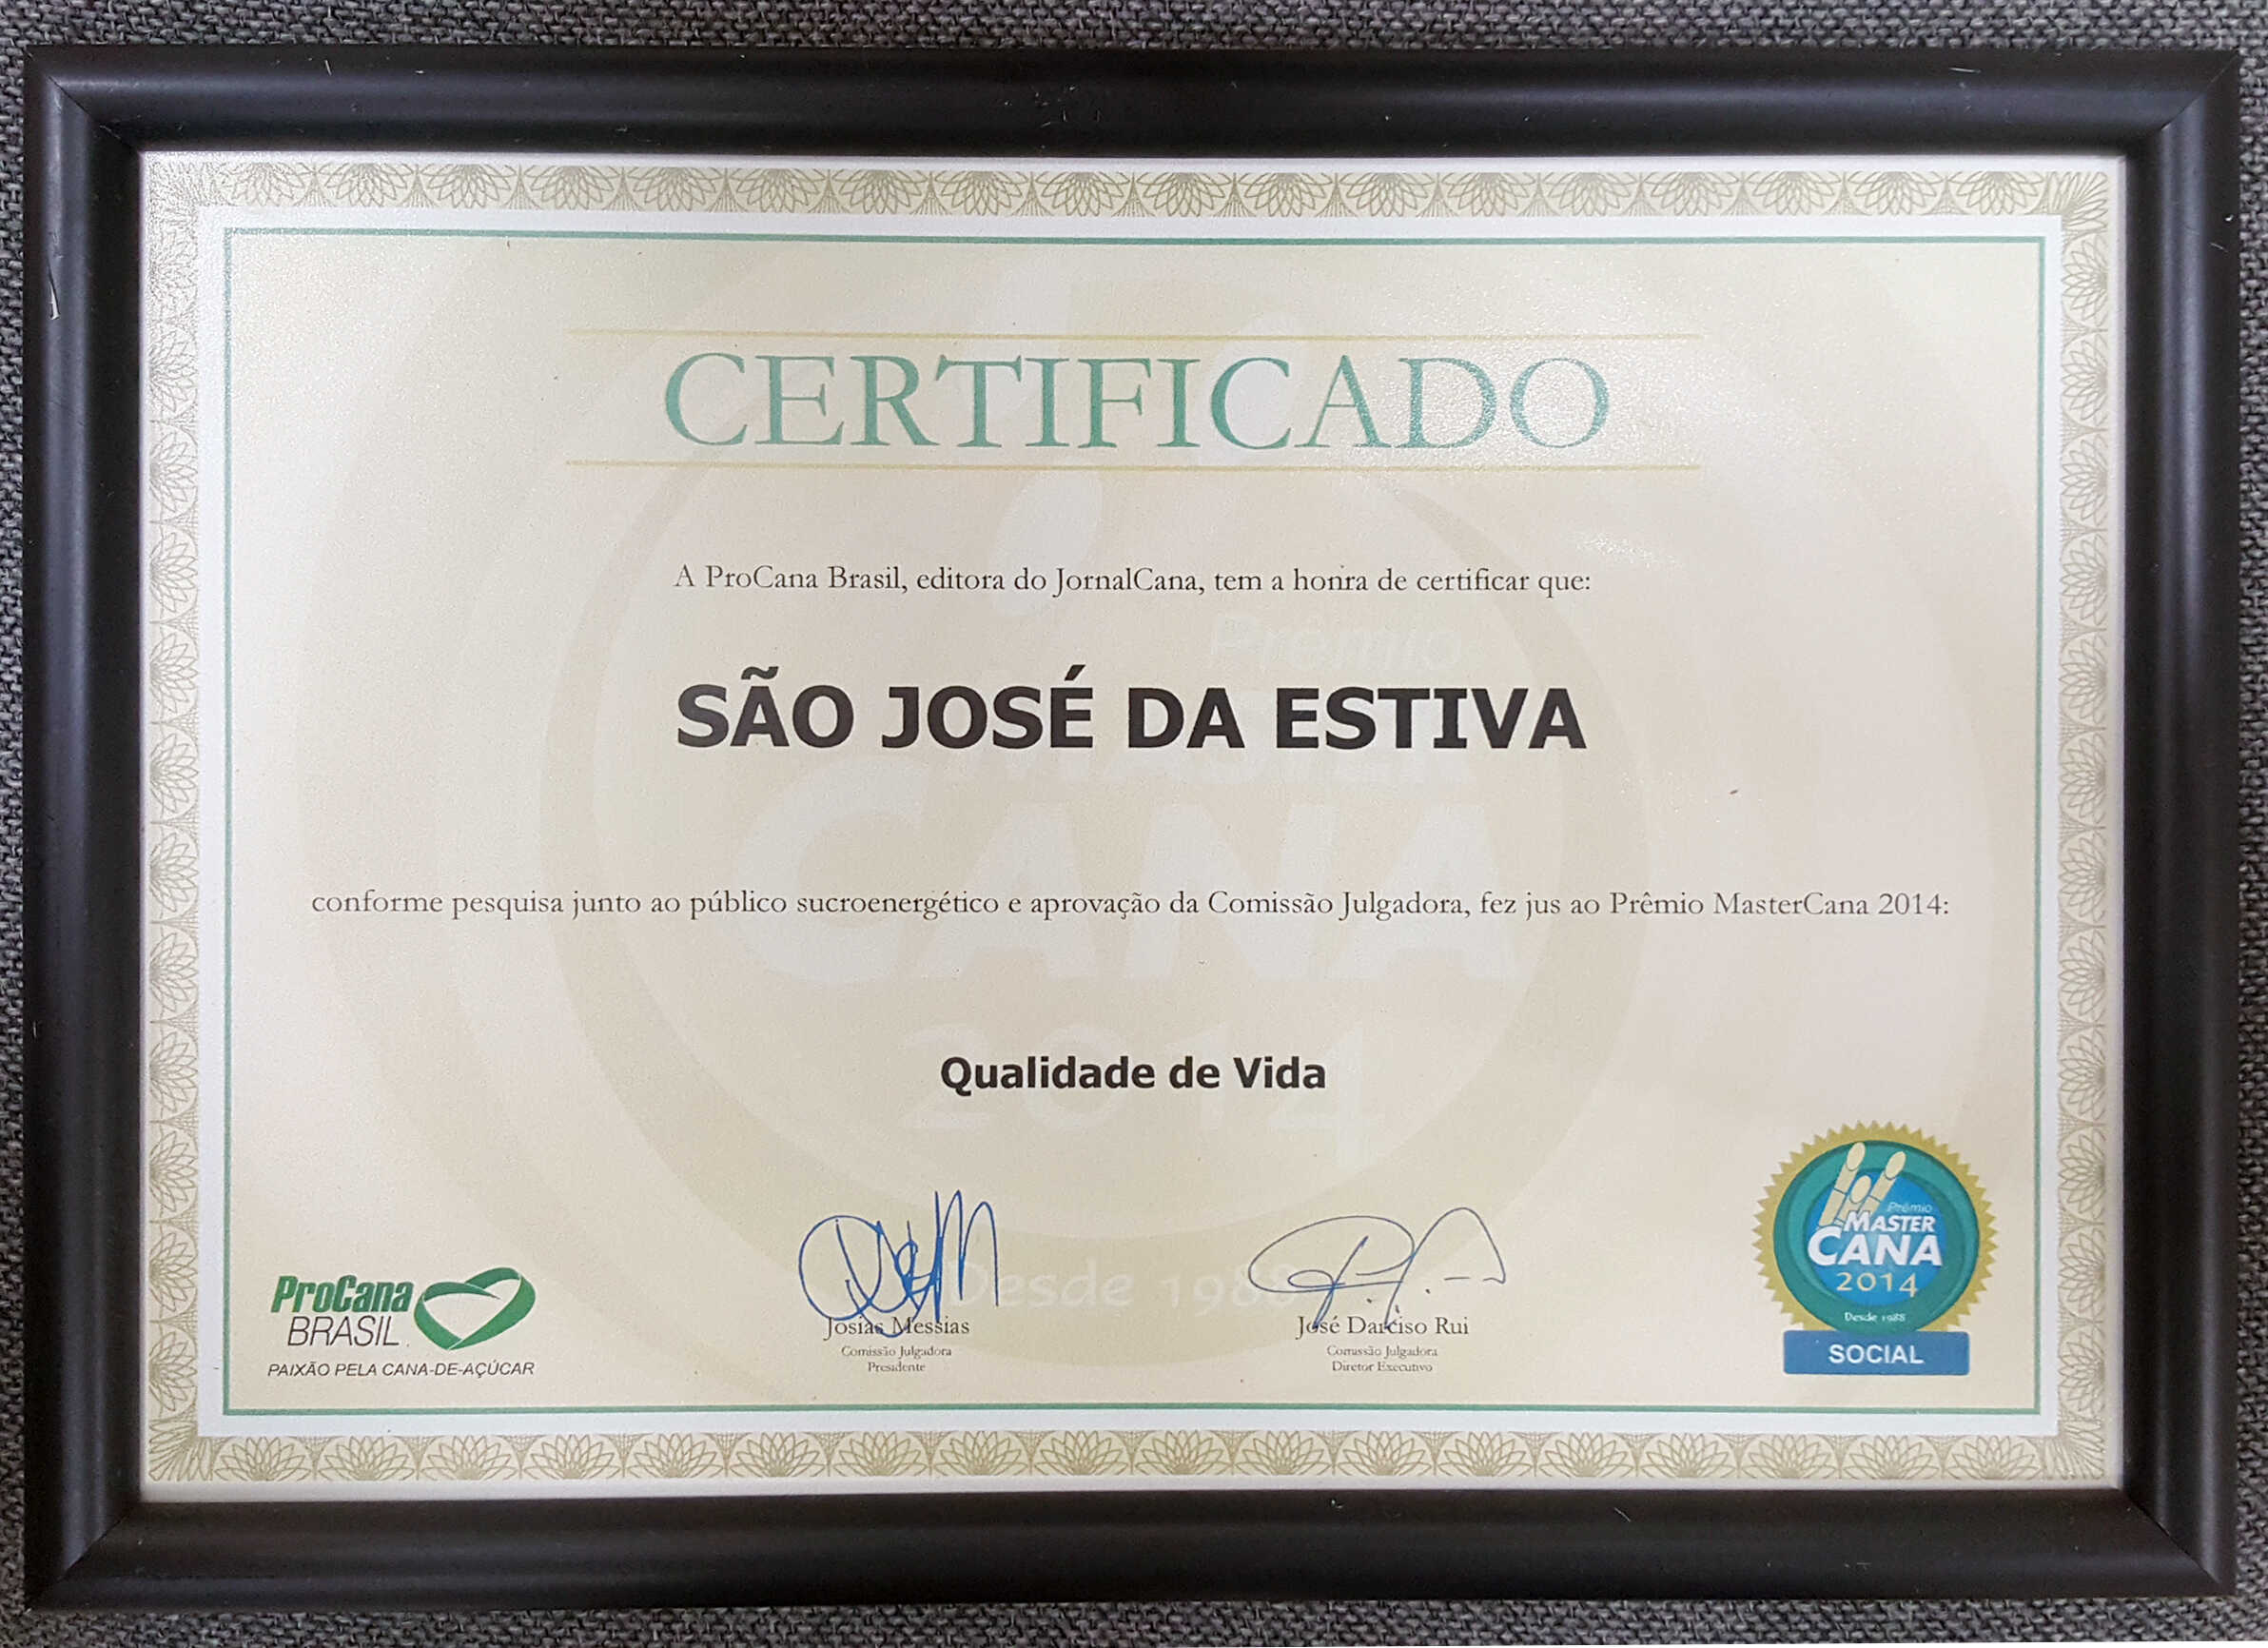 2014-Certificado MasterCana Social - Qualidade de Vida.jpg (2.32 MB)